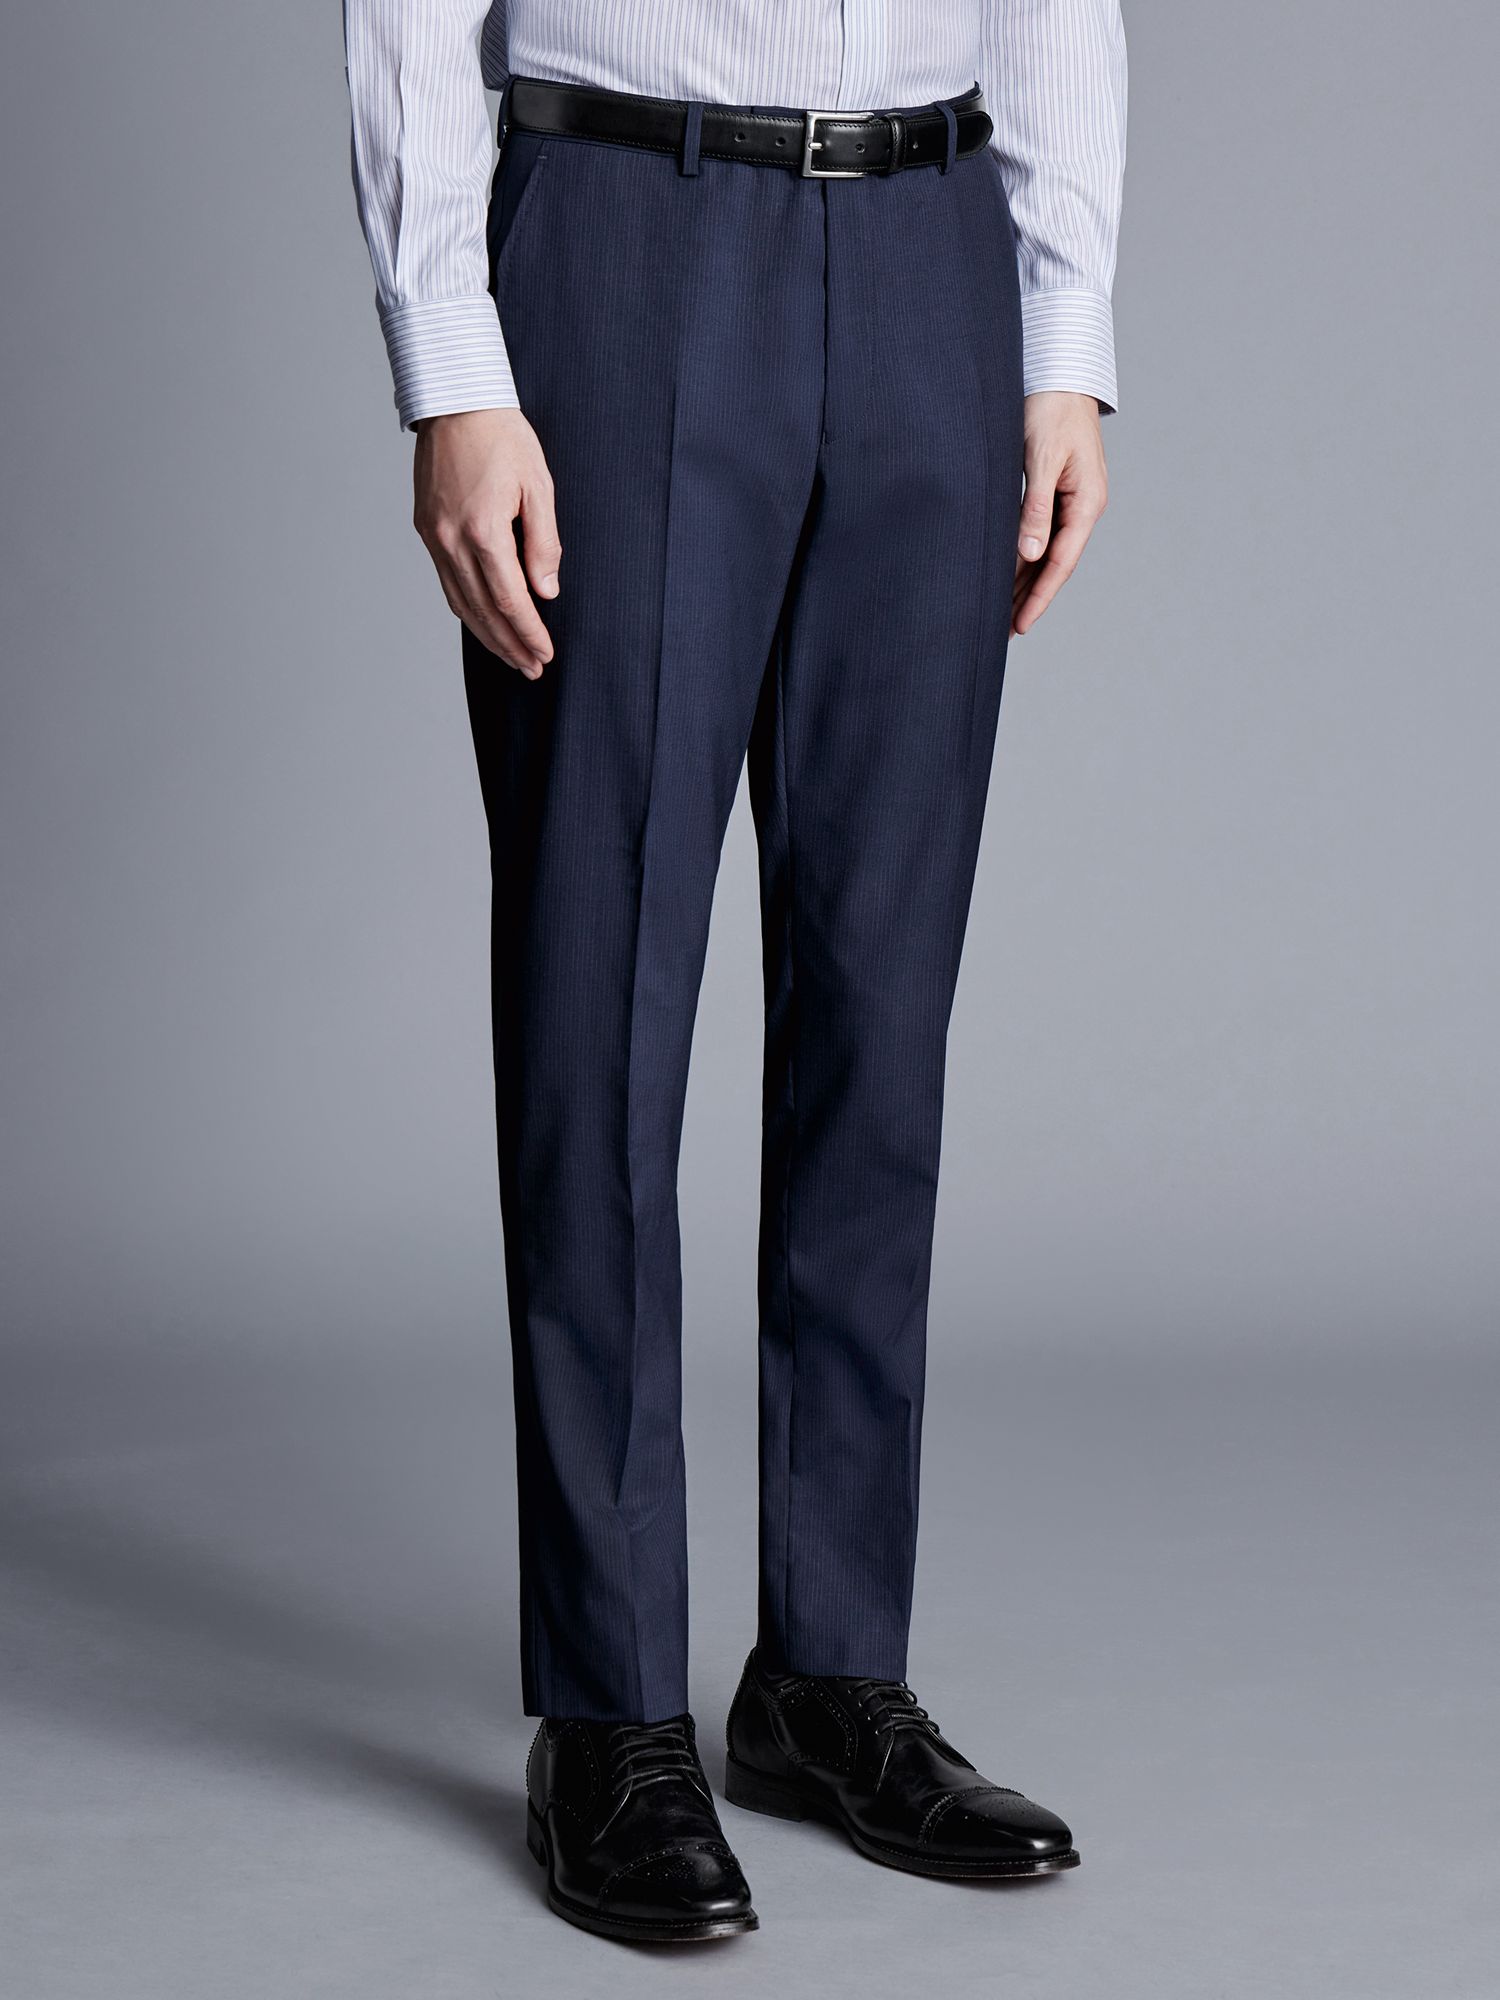 Charles Tyrwhitt Slim Fit Stripe Suit Trousers, Navy